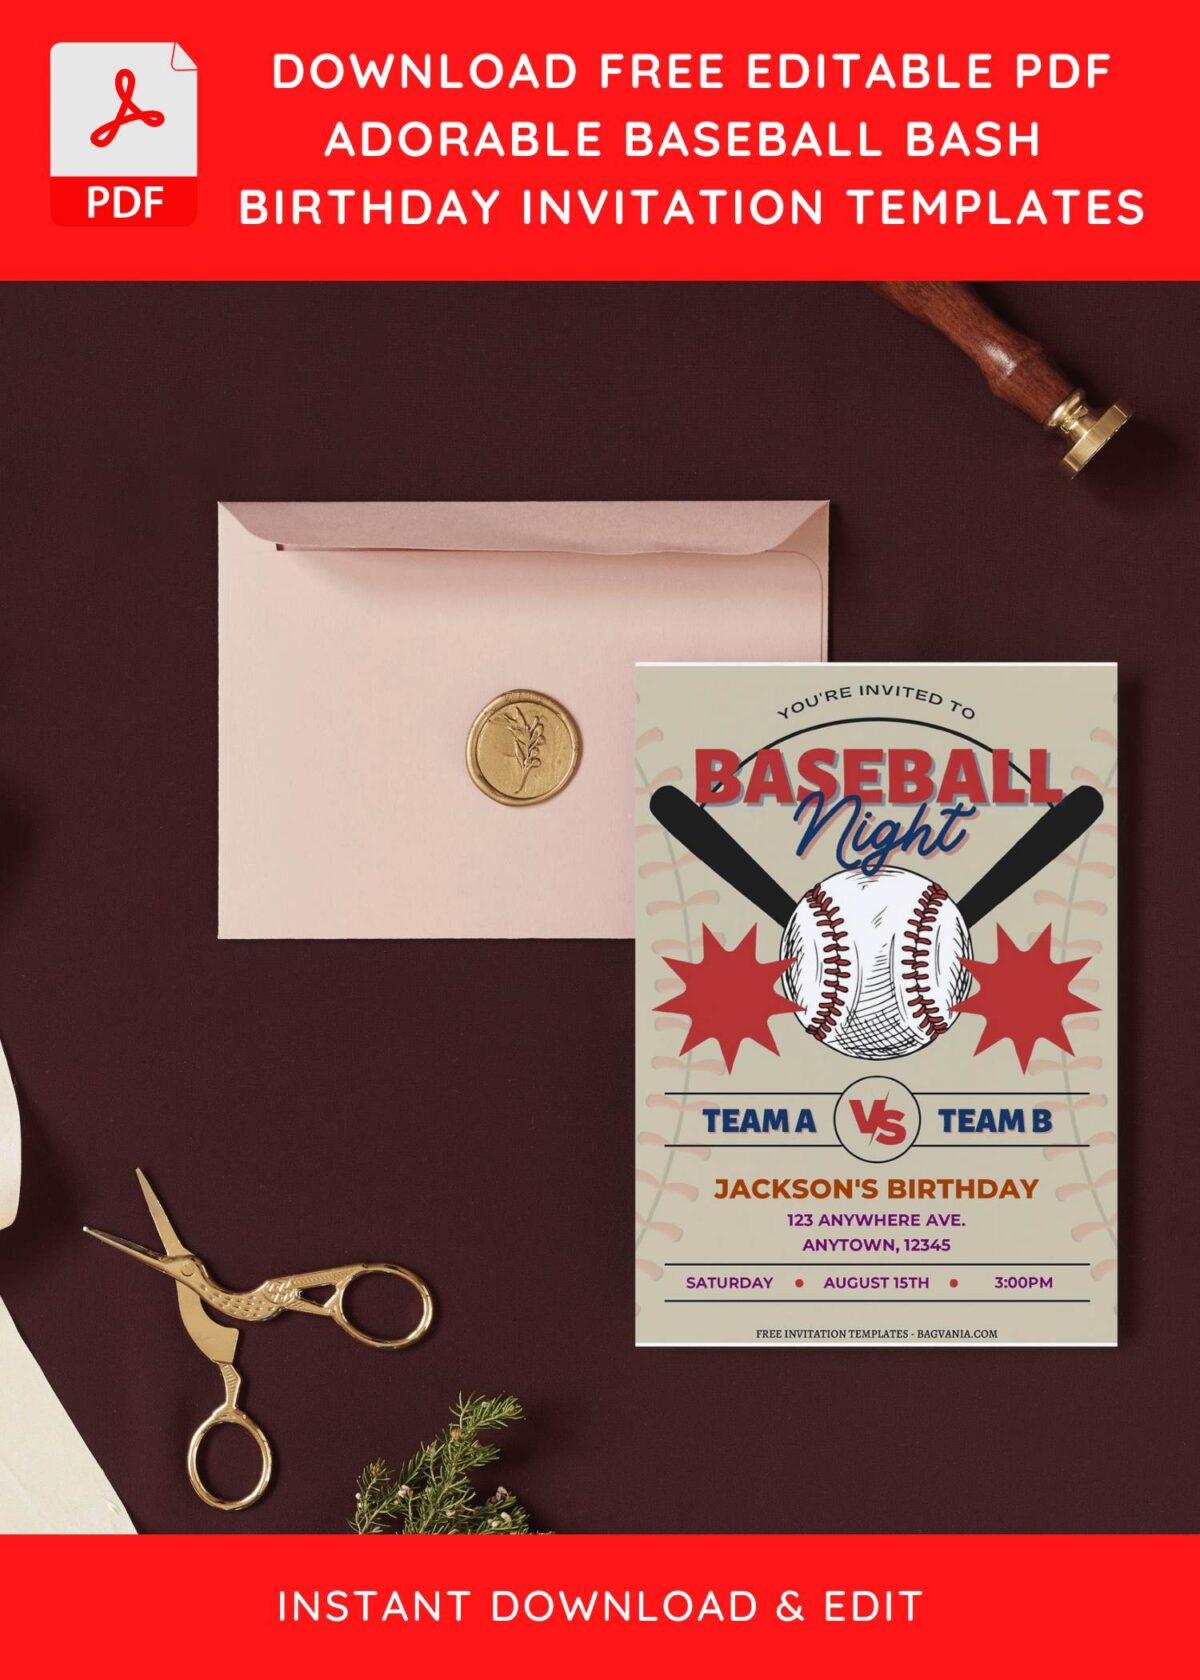 (Free Editable PDF) Awesome Baseball Birthday Invitation Templates II